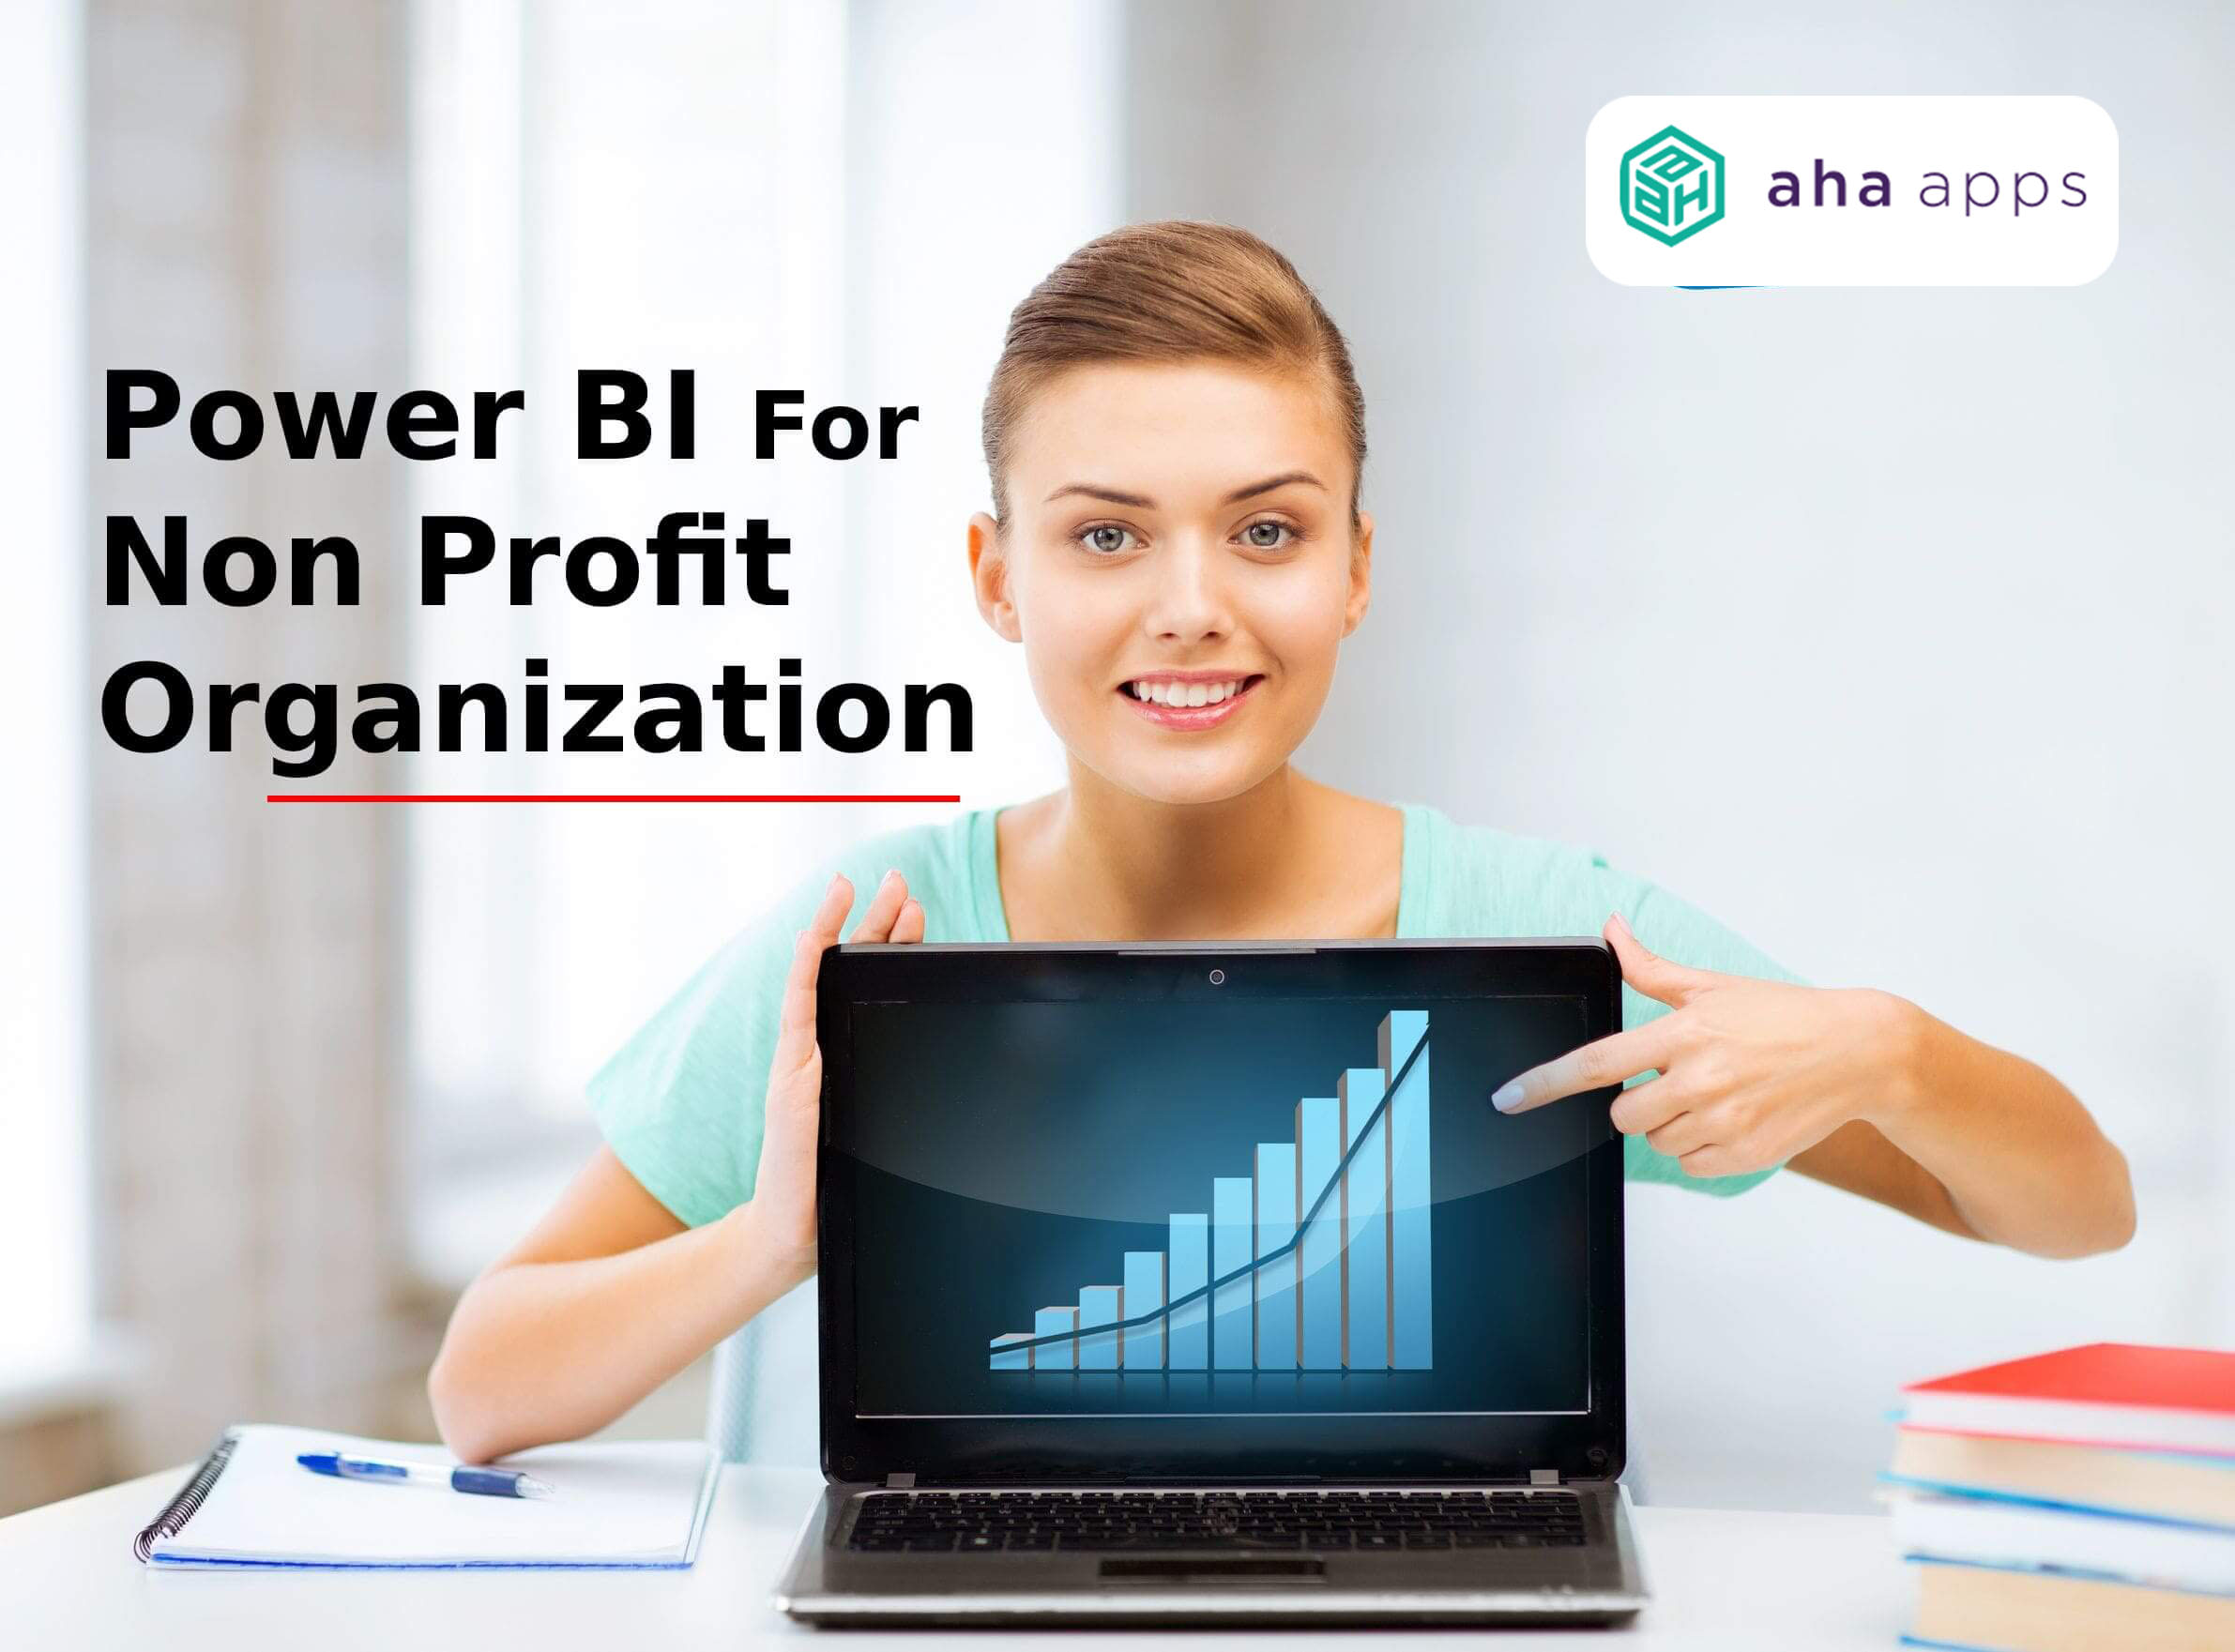 Power BI for Non Profit organization - AhaApps